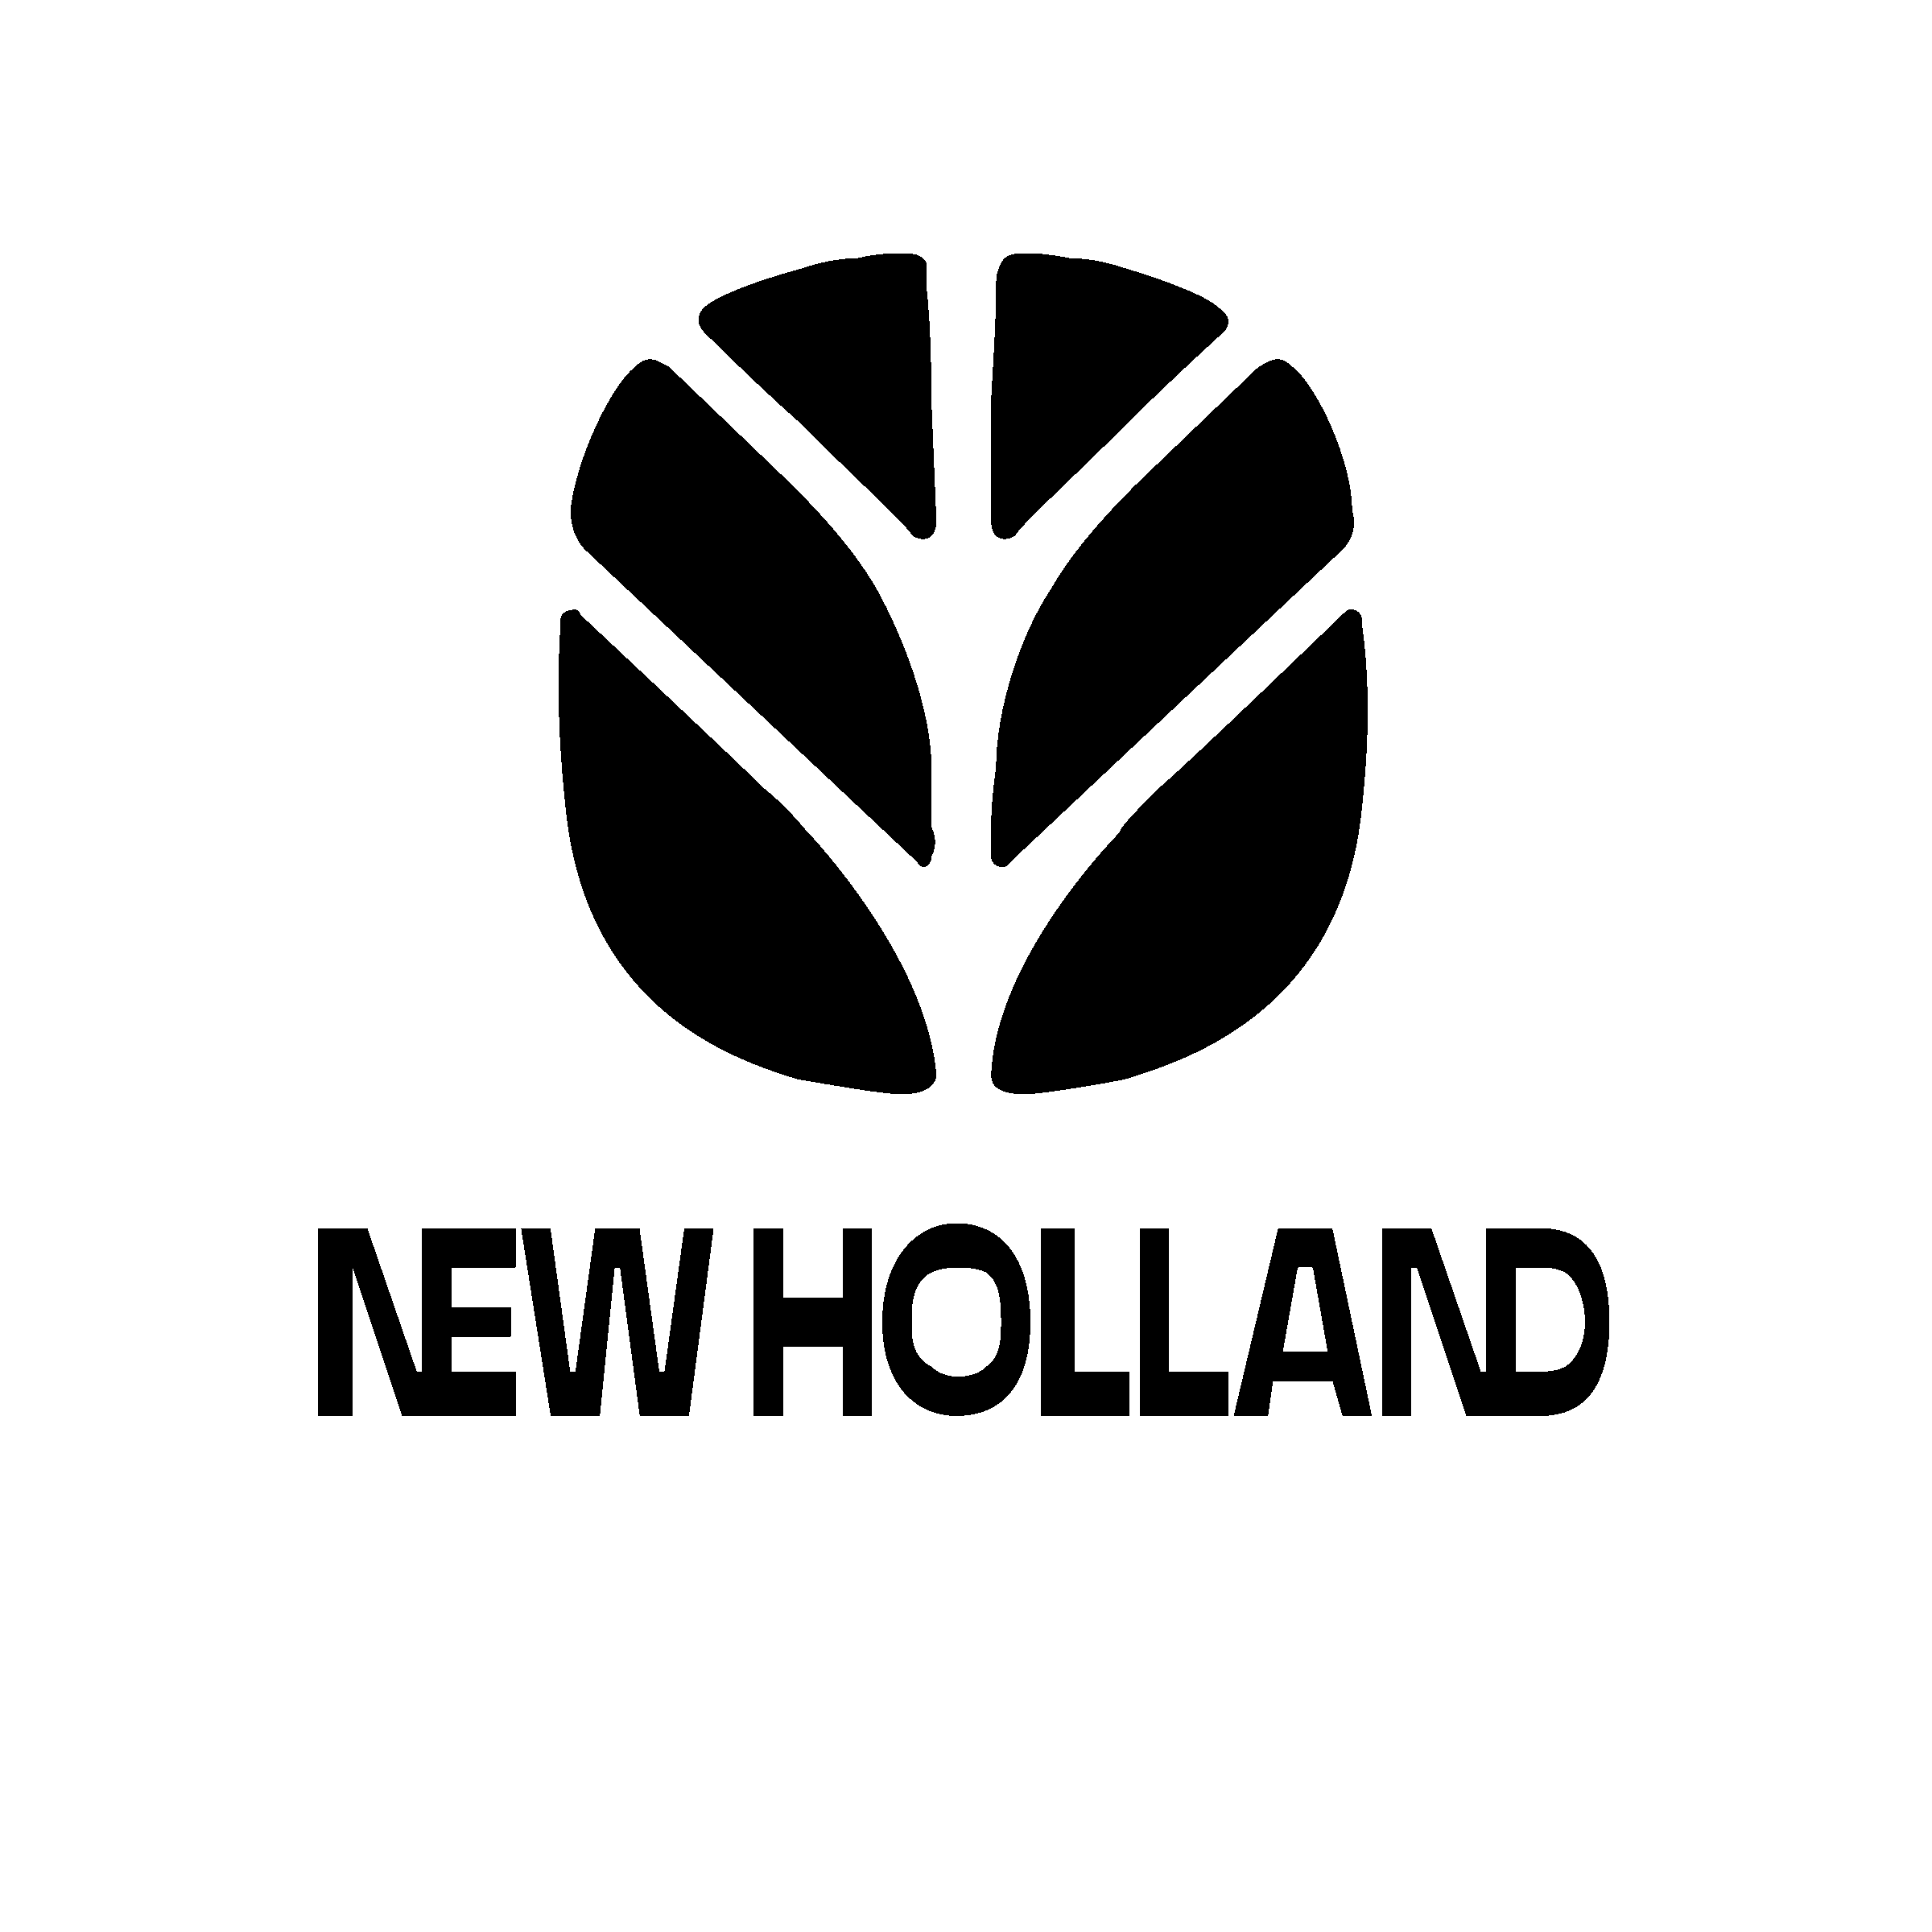 New Holland Construction Logo - New Holland Construction Logo PNG Transparent & SVG Vector - Freebie ...